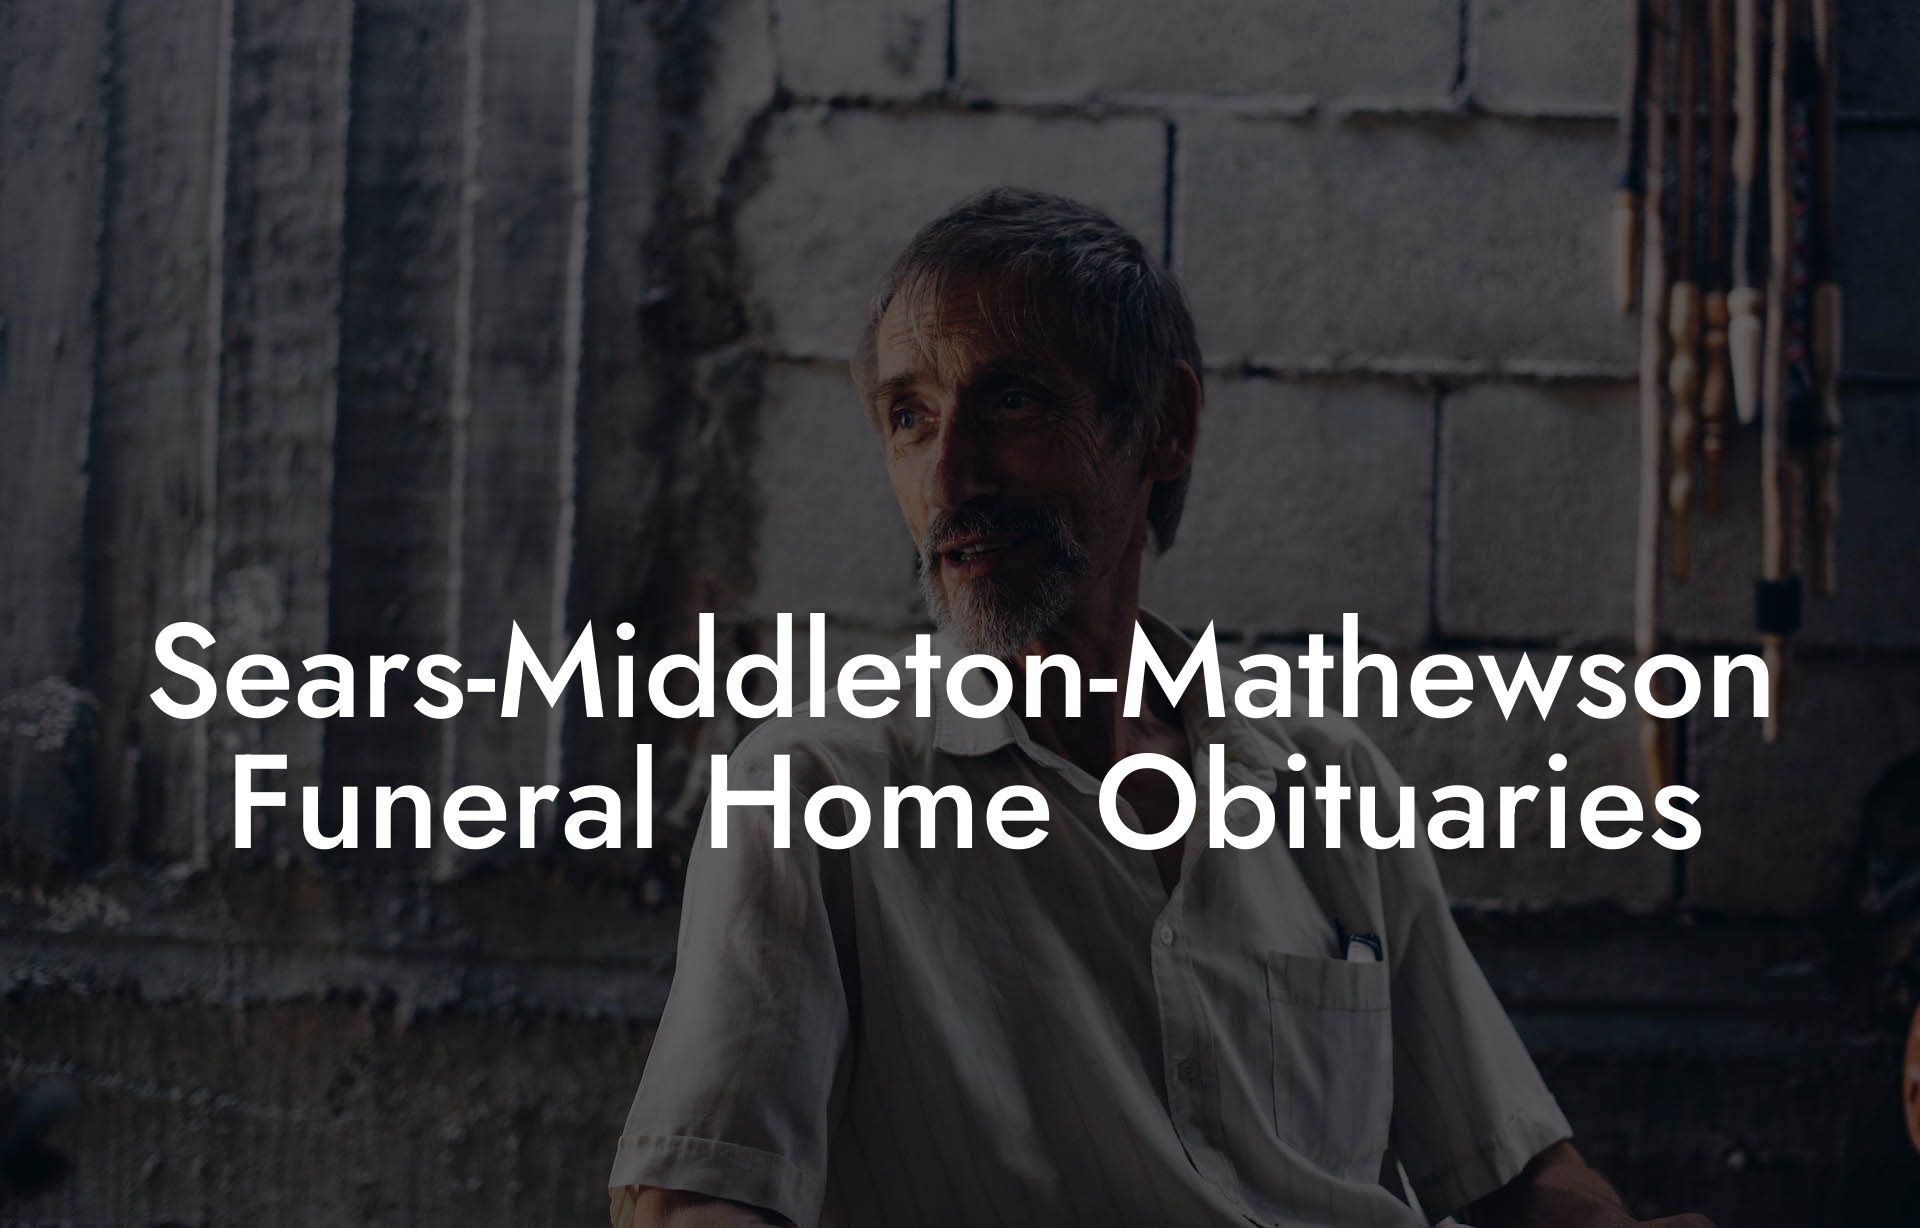 Sears-Middleton-Mathewson Funeral Home Obituaries